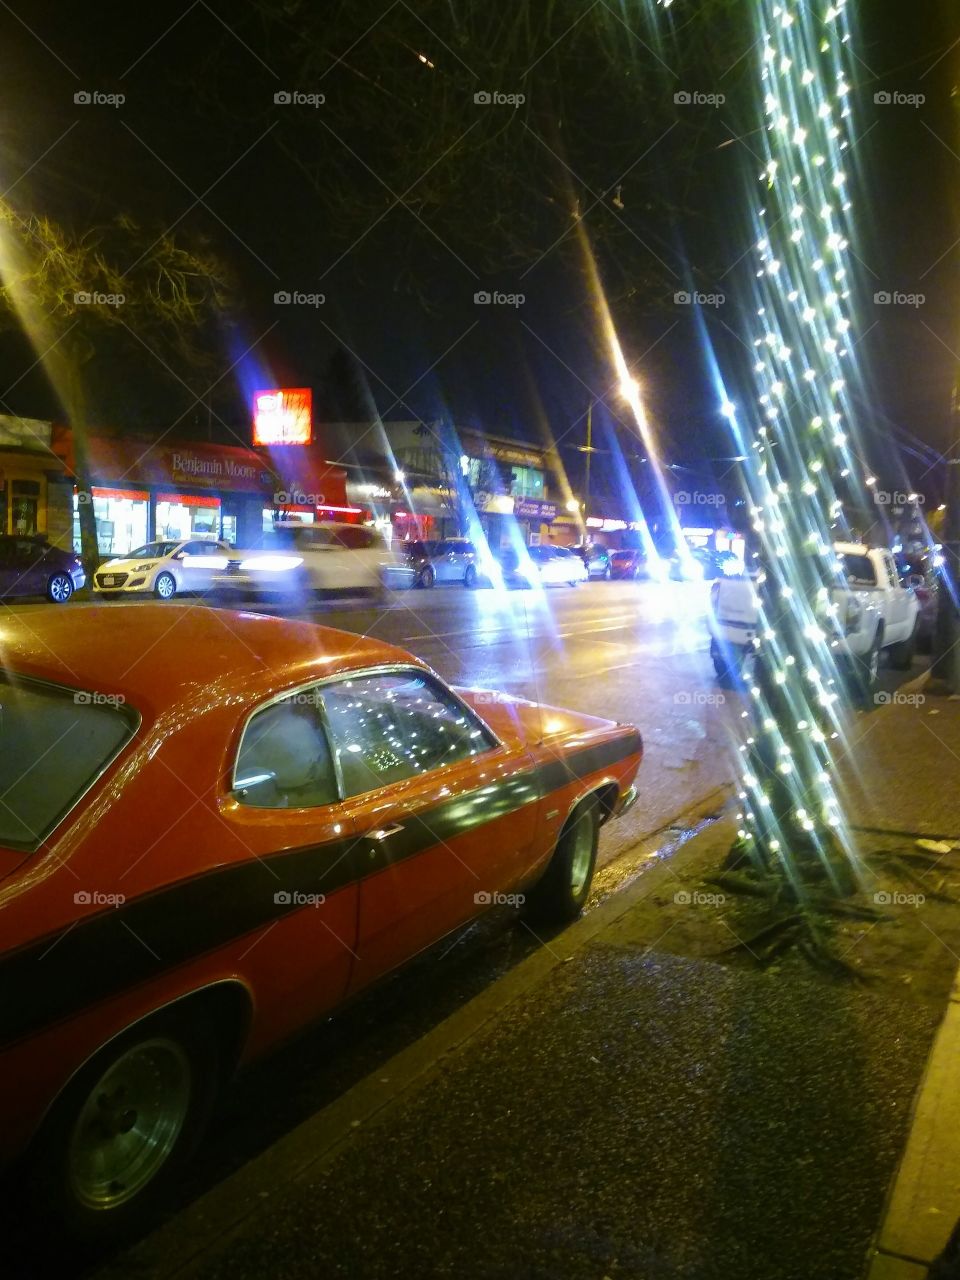 evenings street ligths red car